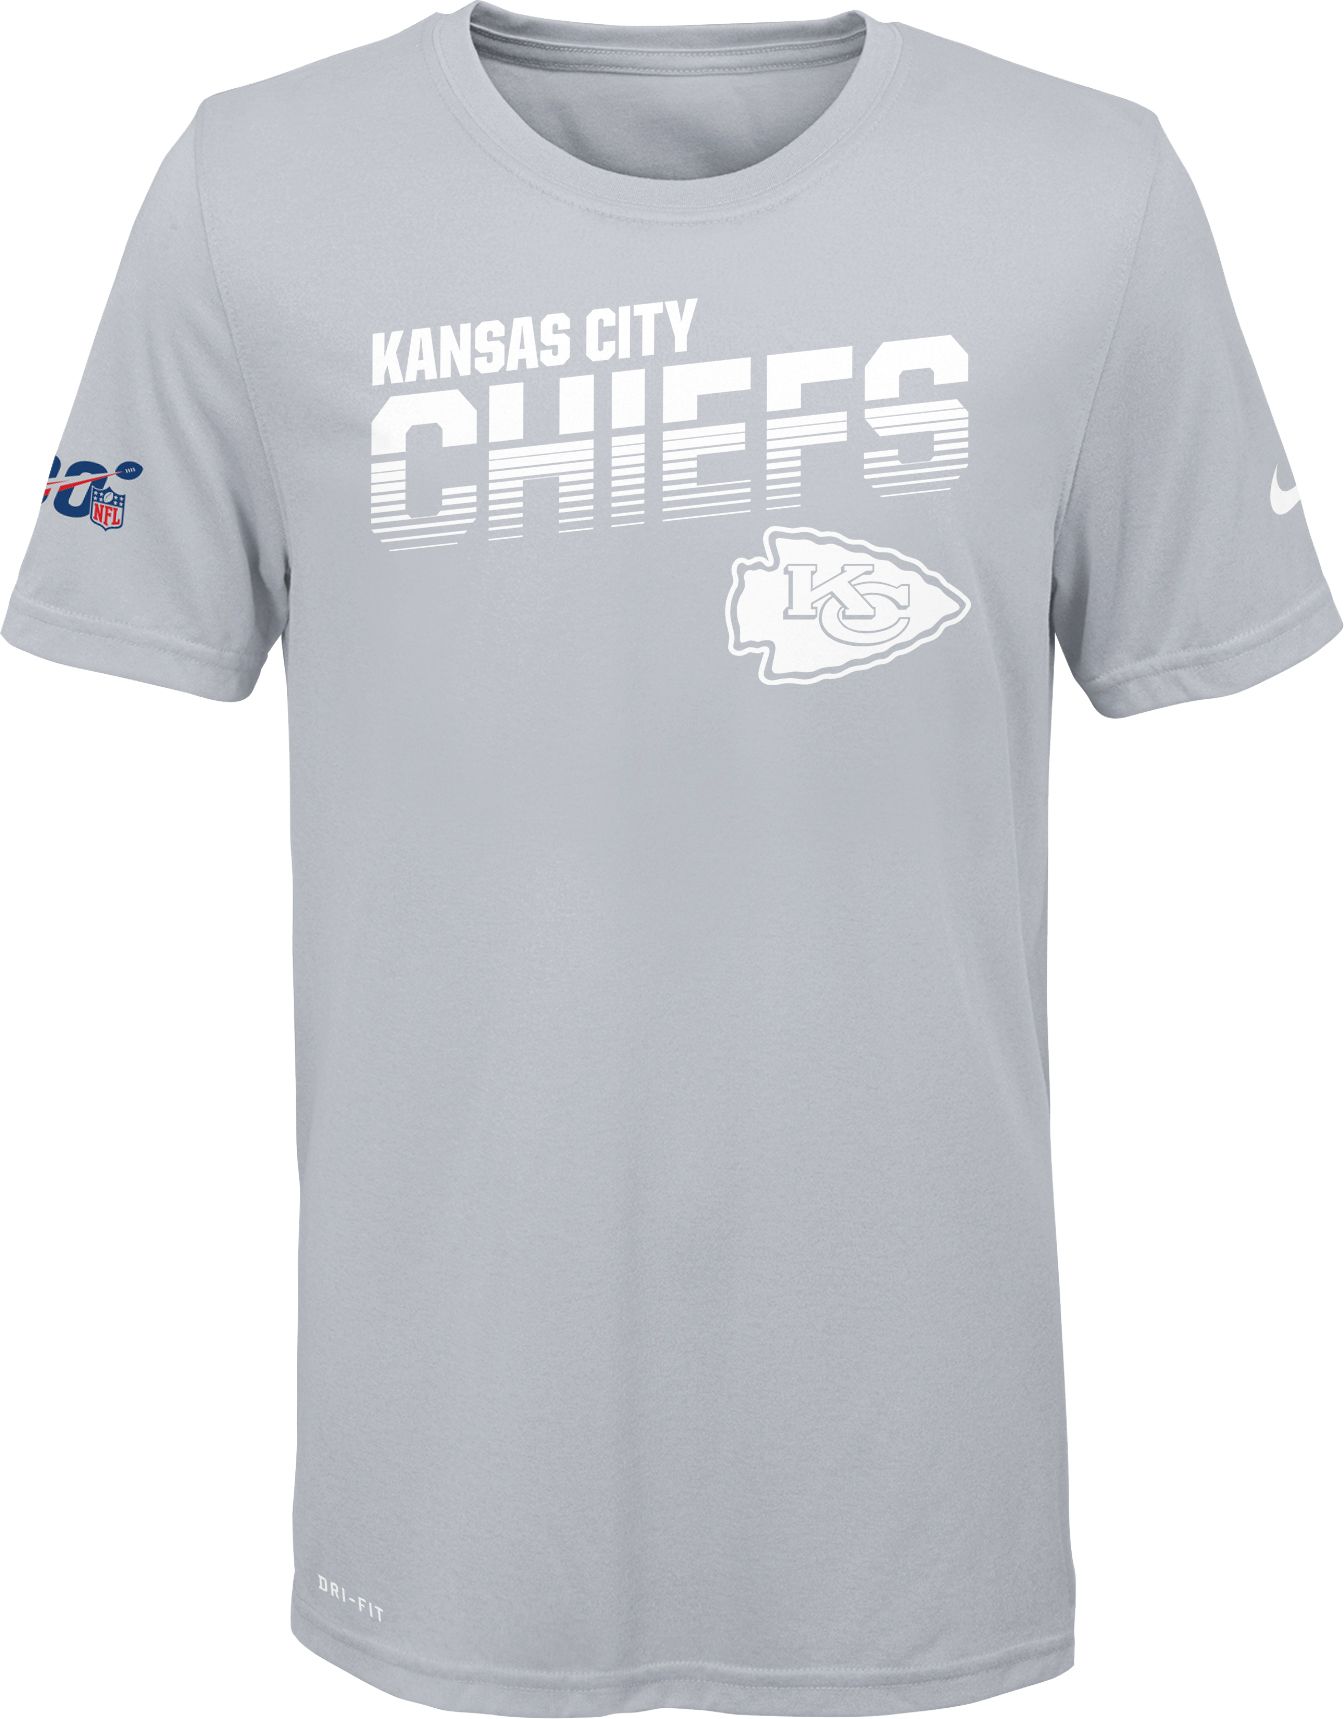 Kansas City Chiefs Apparel & Gear | NFL Fan Shop at DICK'S